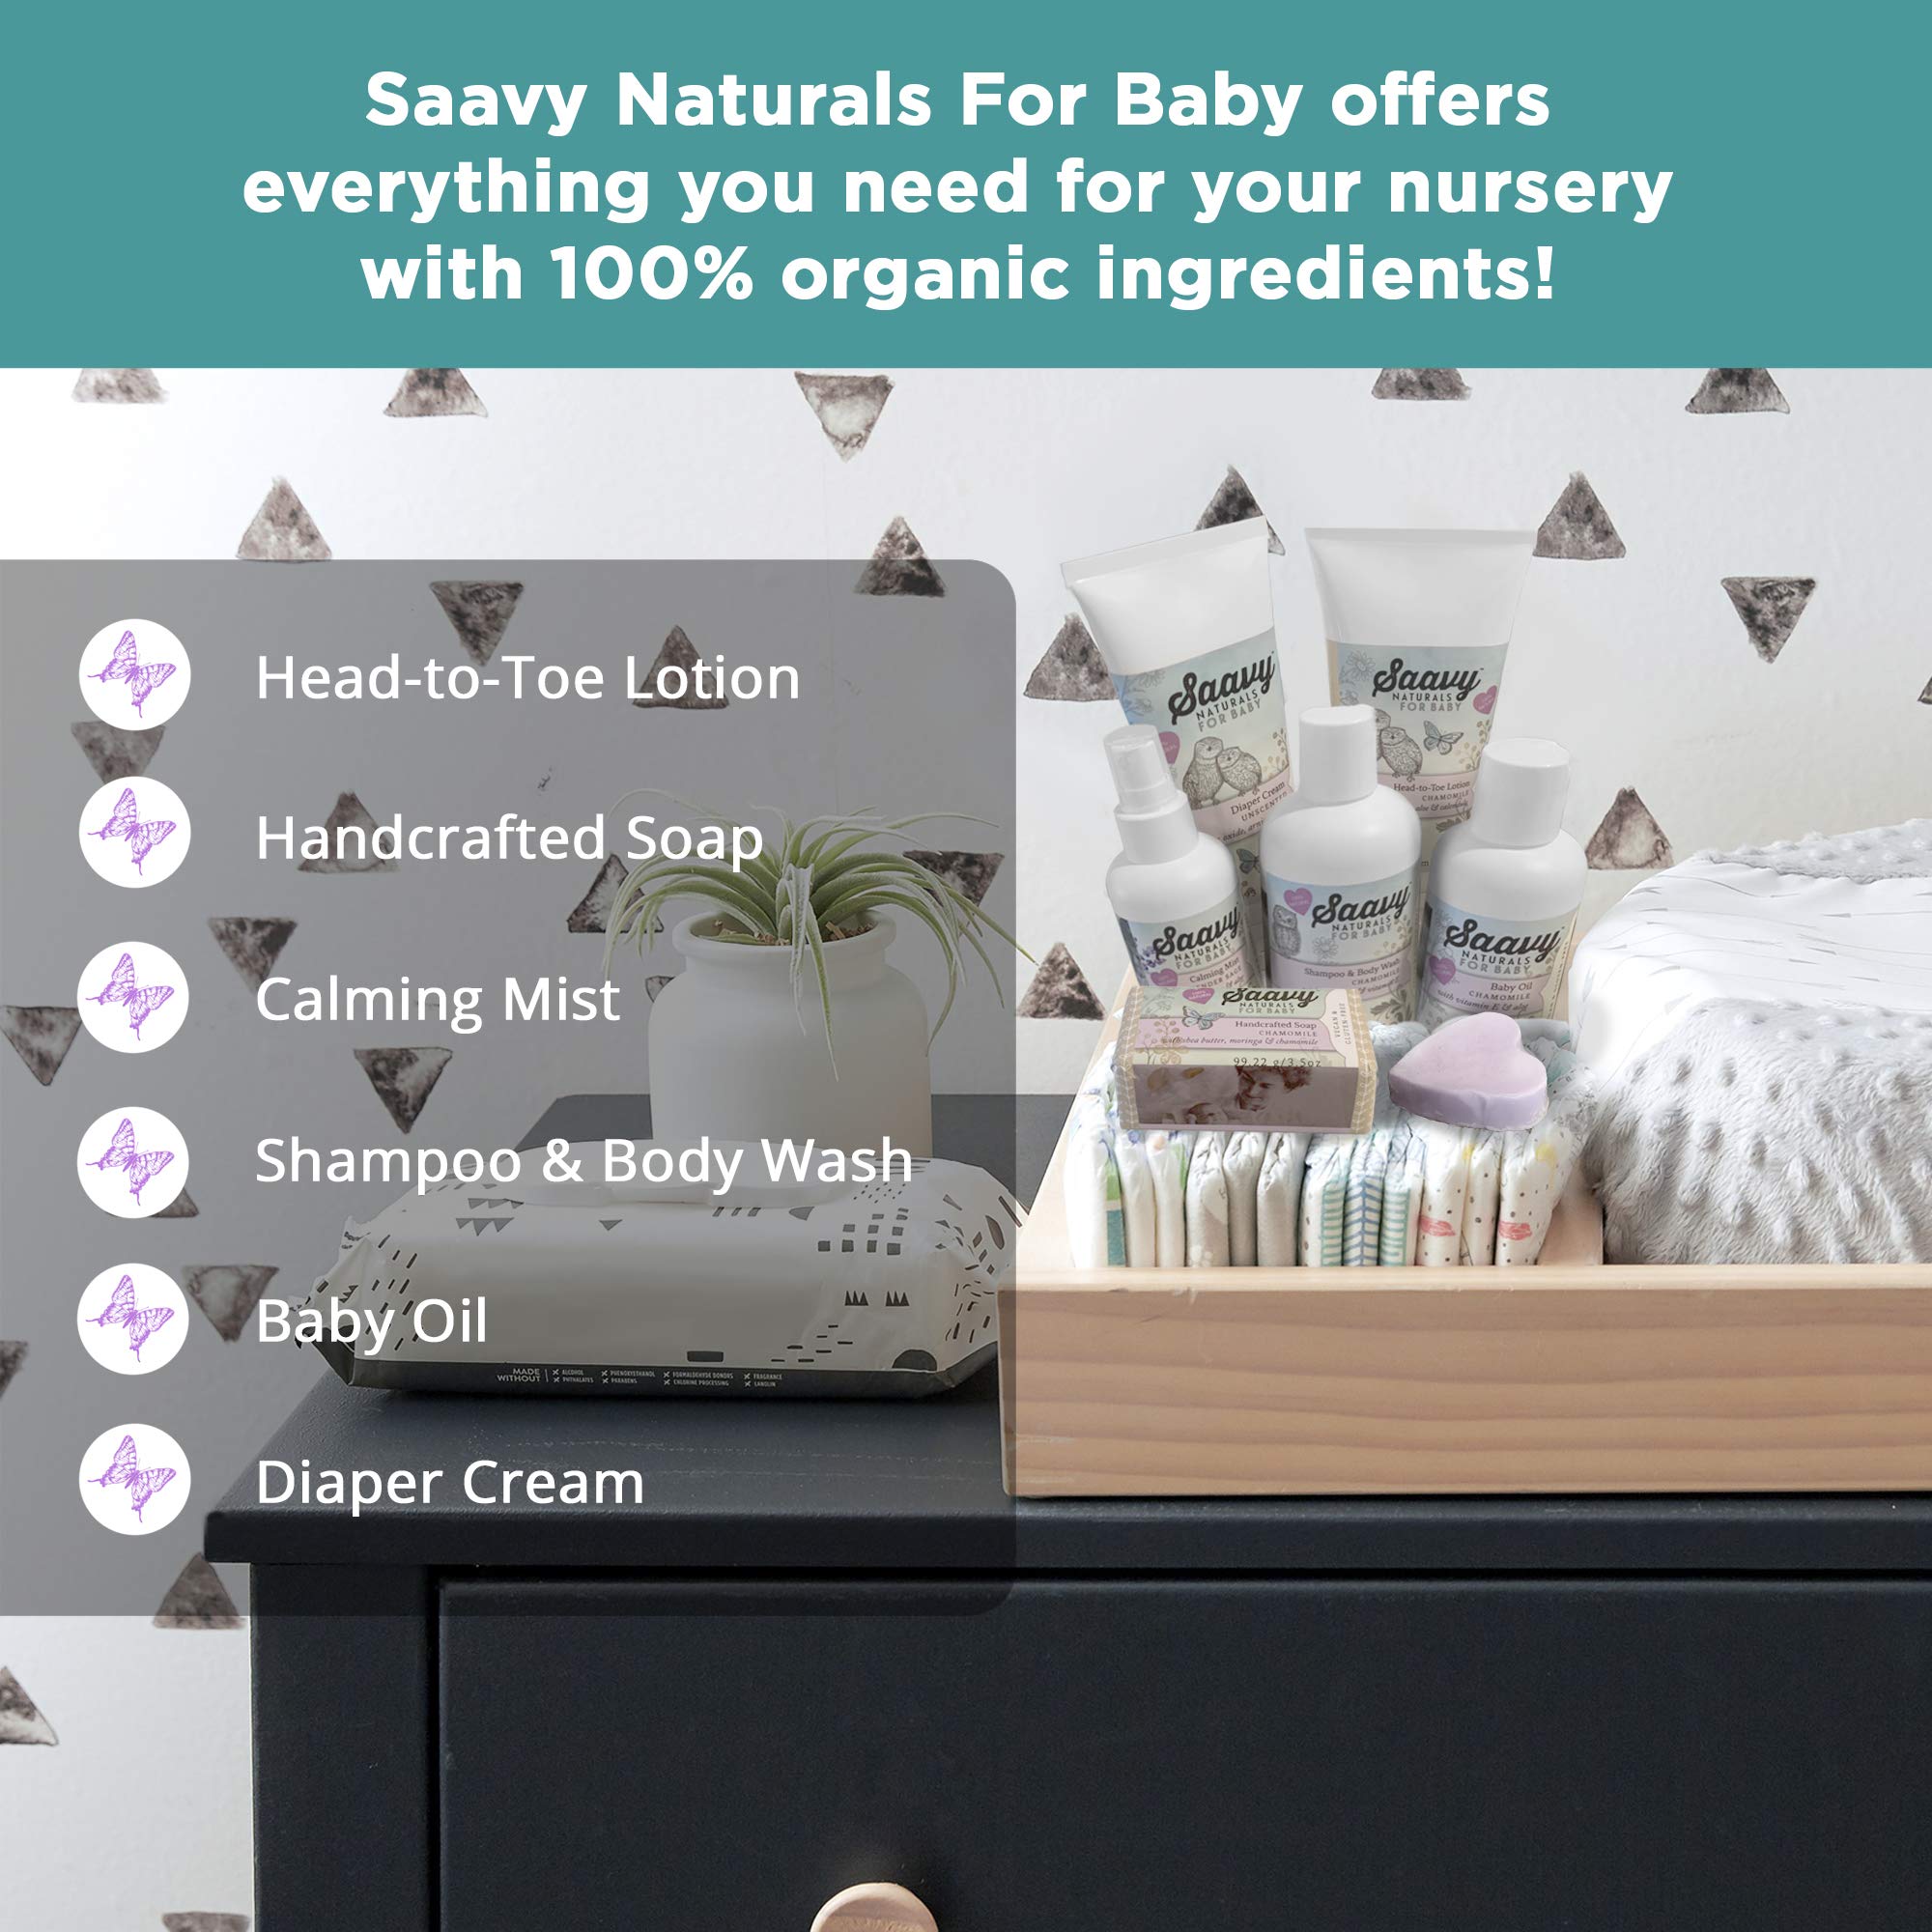 Saavy Naturals Organic Chamomile Baby Shampoo and Body Wash Set, Calendula and Vitamine E, Gentle Head to Toe Skin Care for Infant Bath Time, 8oz Per Bottle